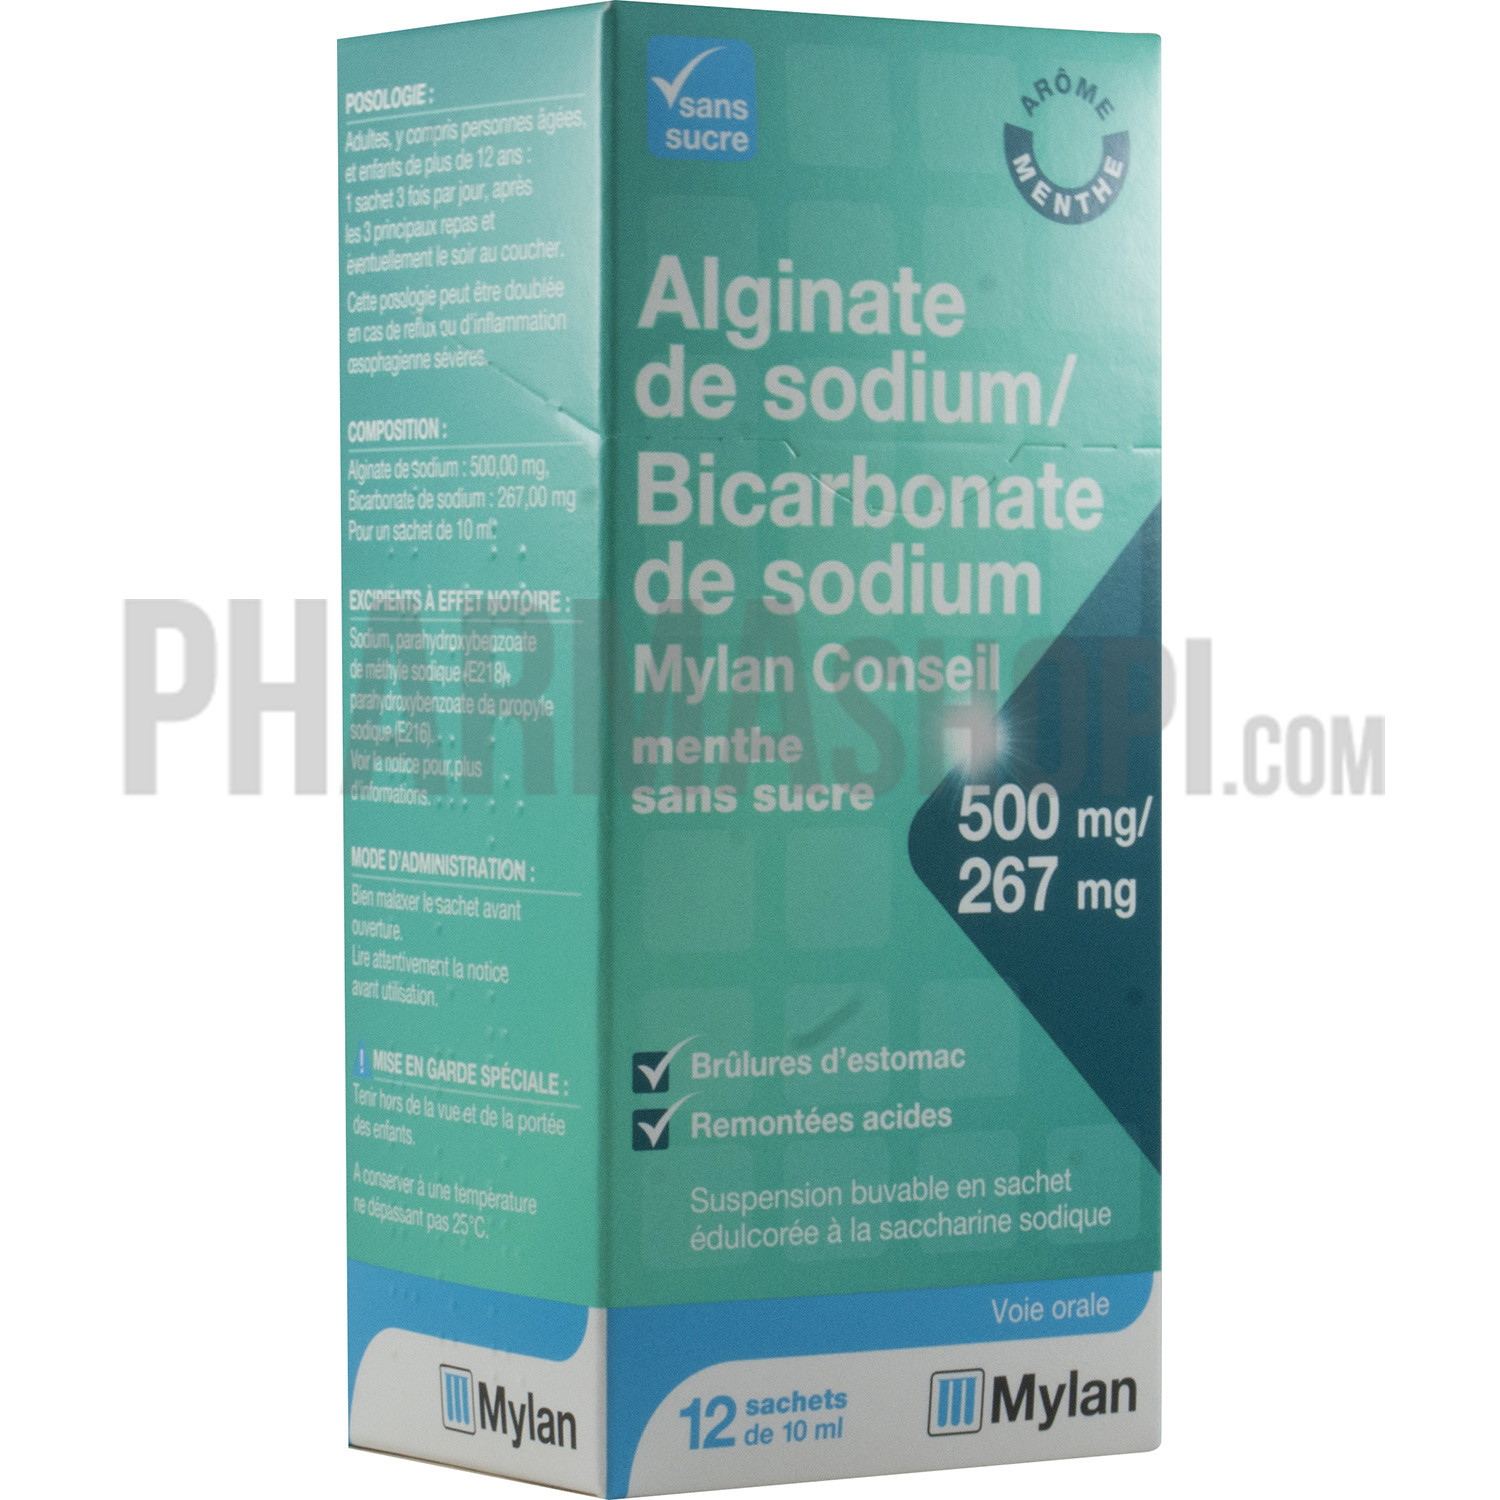 Alginate de sodium / bicarbonate de sodium Mylan conseil - boite de 12 sachets